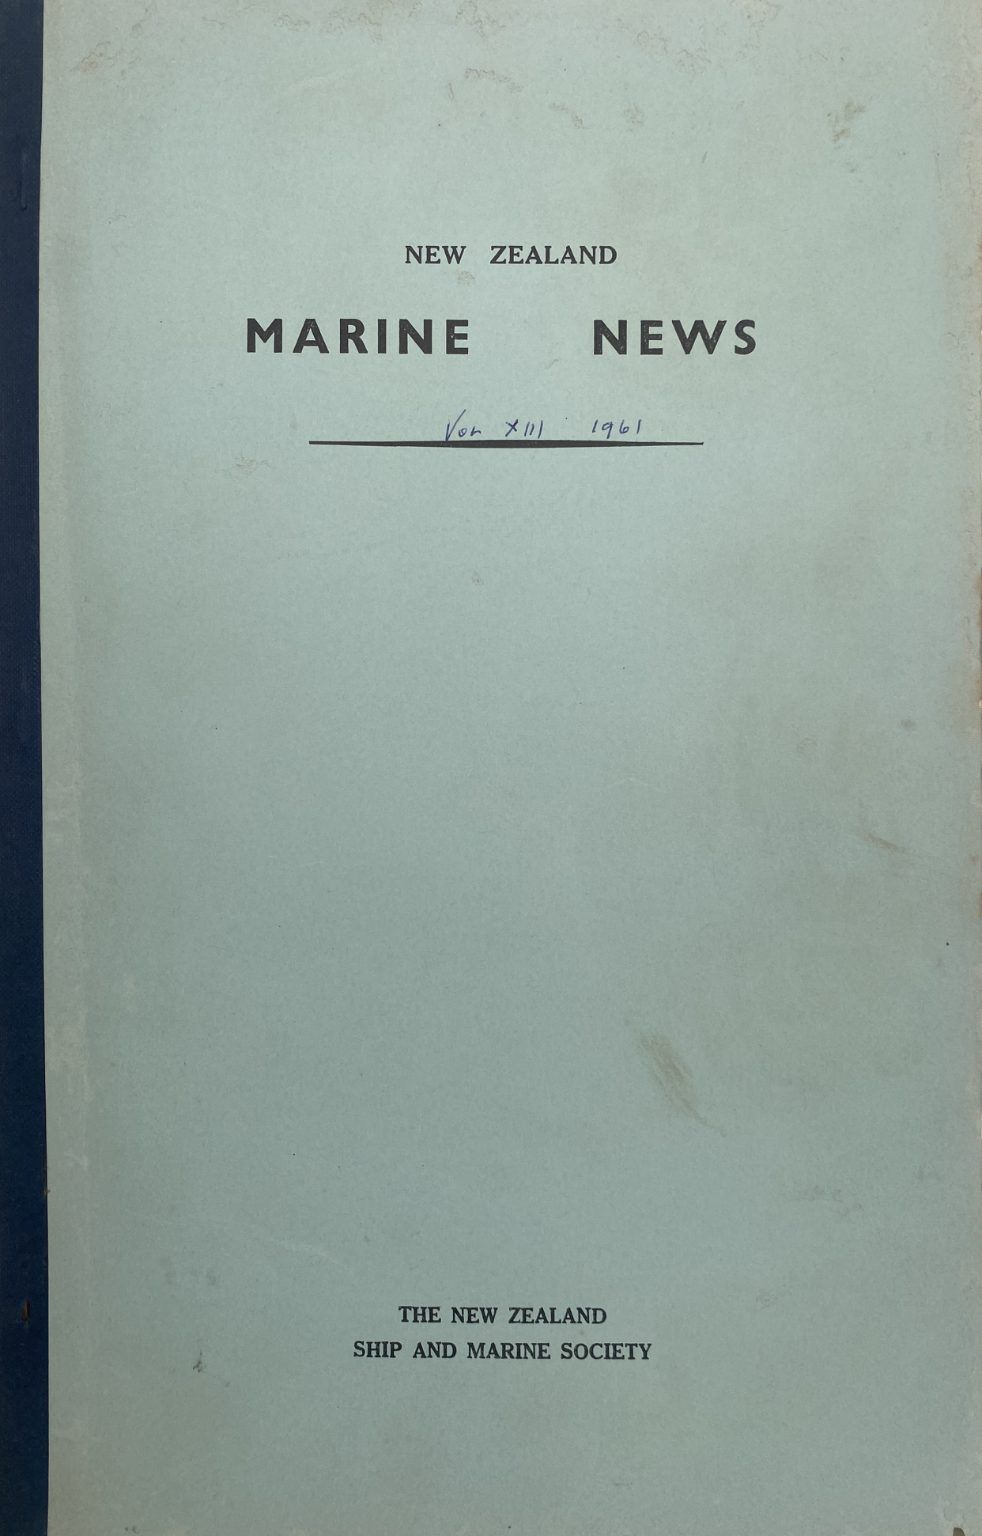 NEW ZEALAND MARINE NEWS: Volume 13, 1961 - 1962